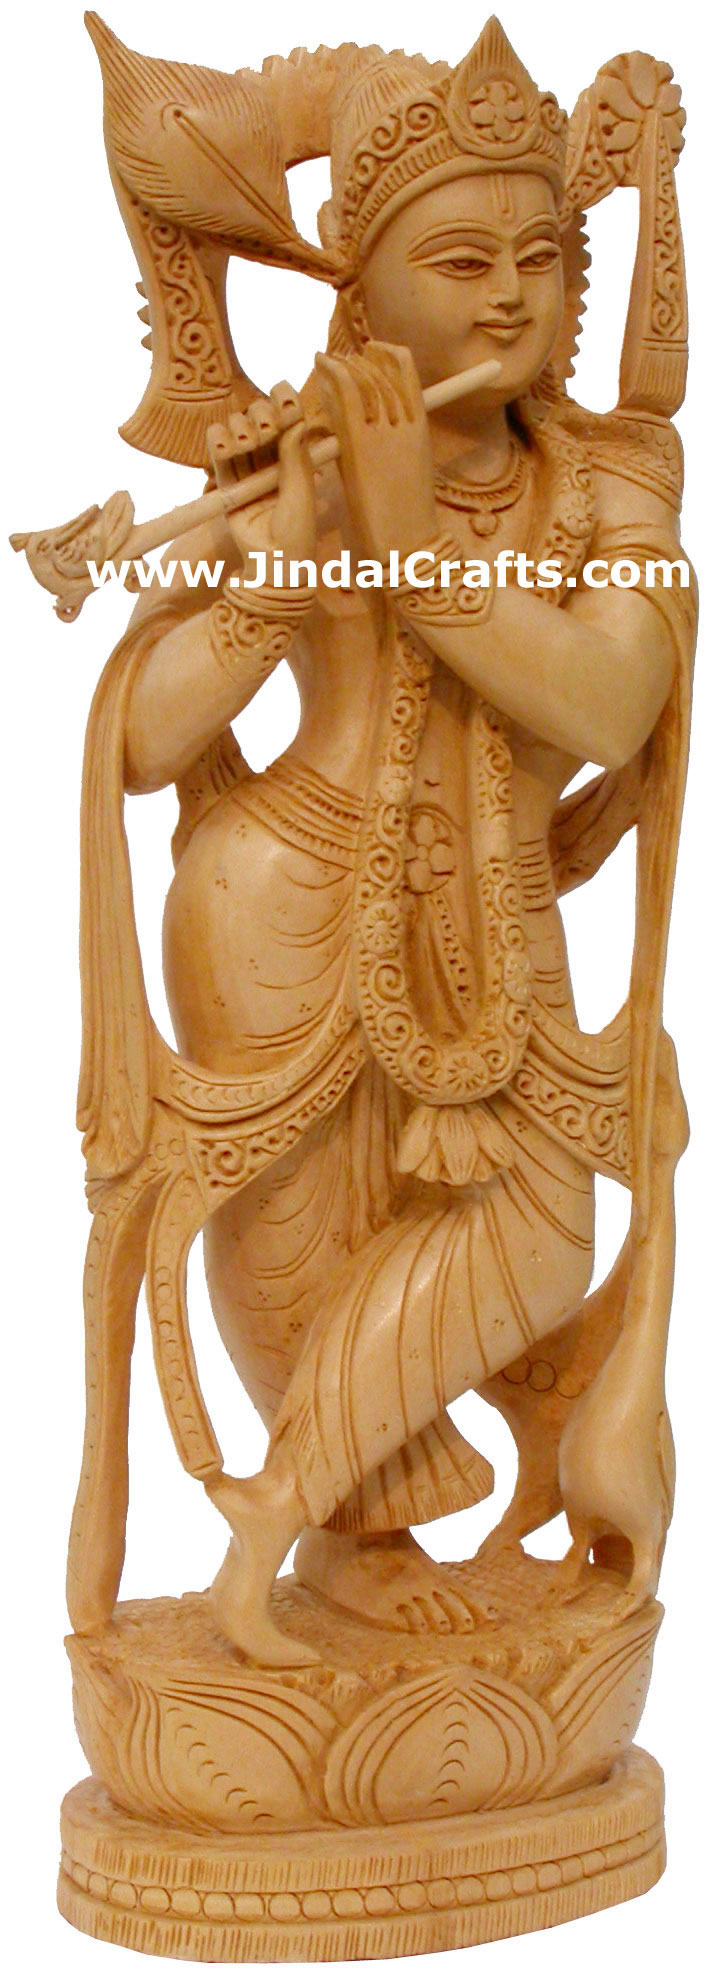 Hindu Deities Lord Krishna India Wood Carving Artifact Hindu Religious Decor Art